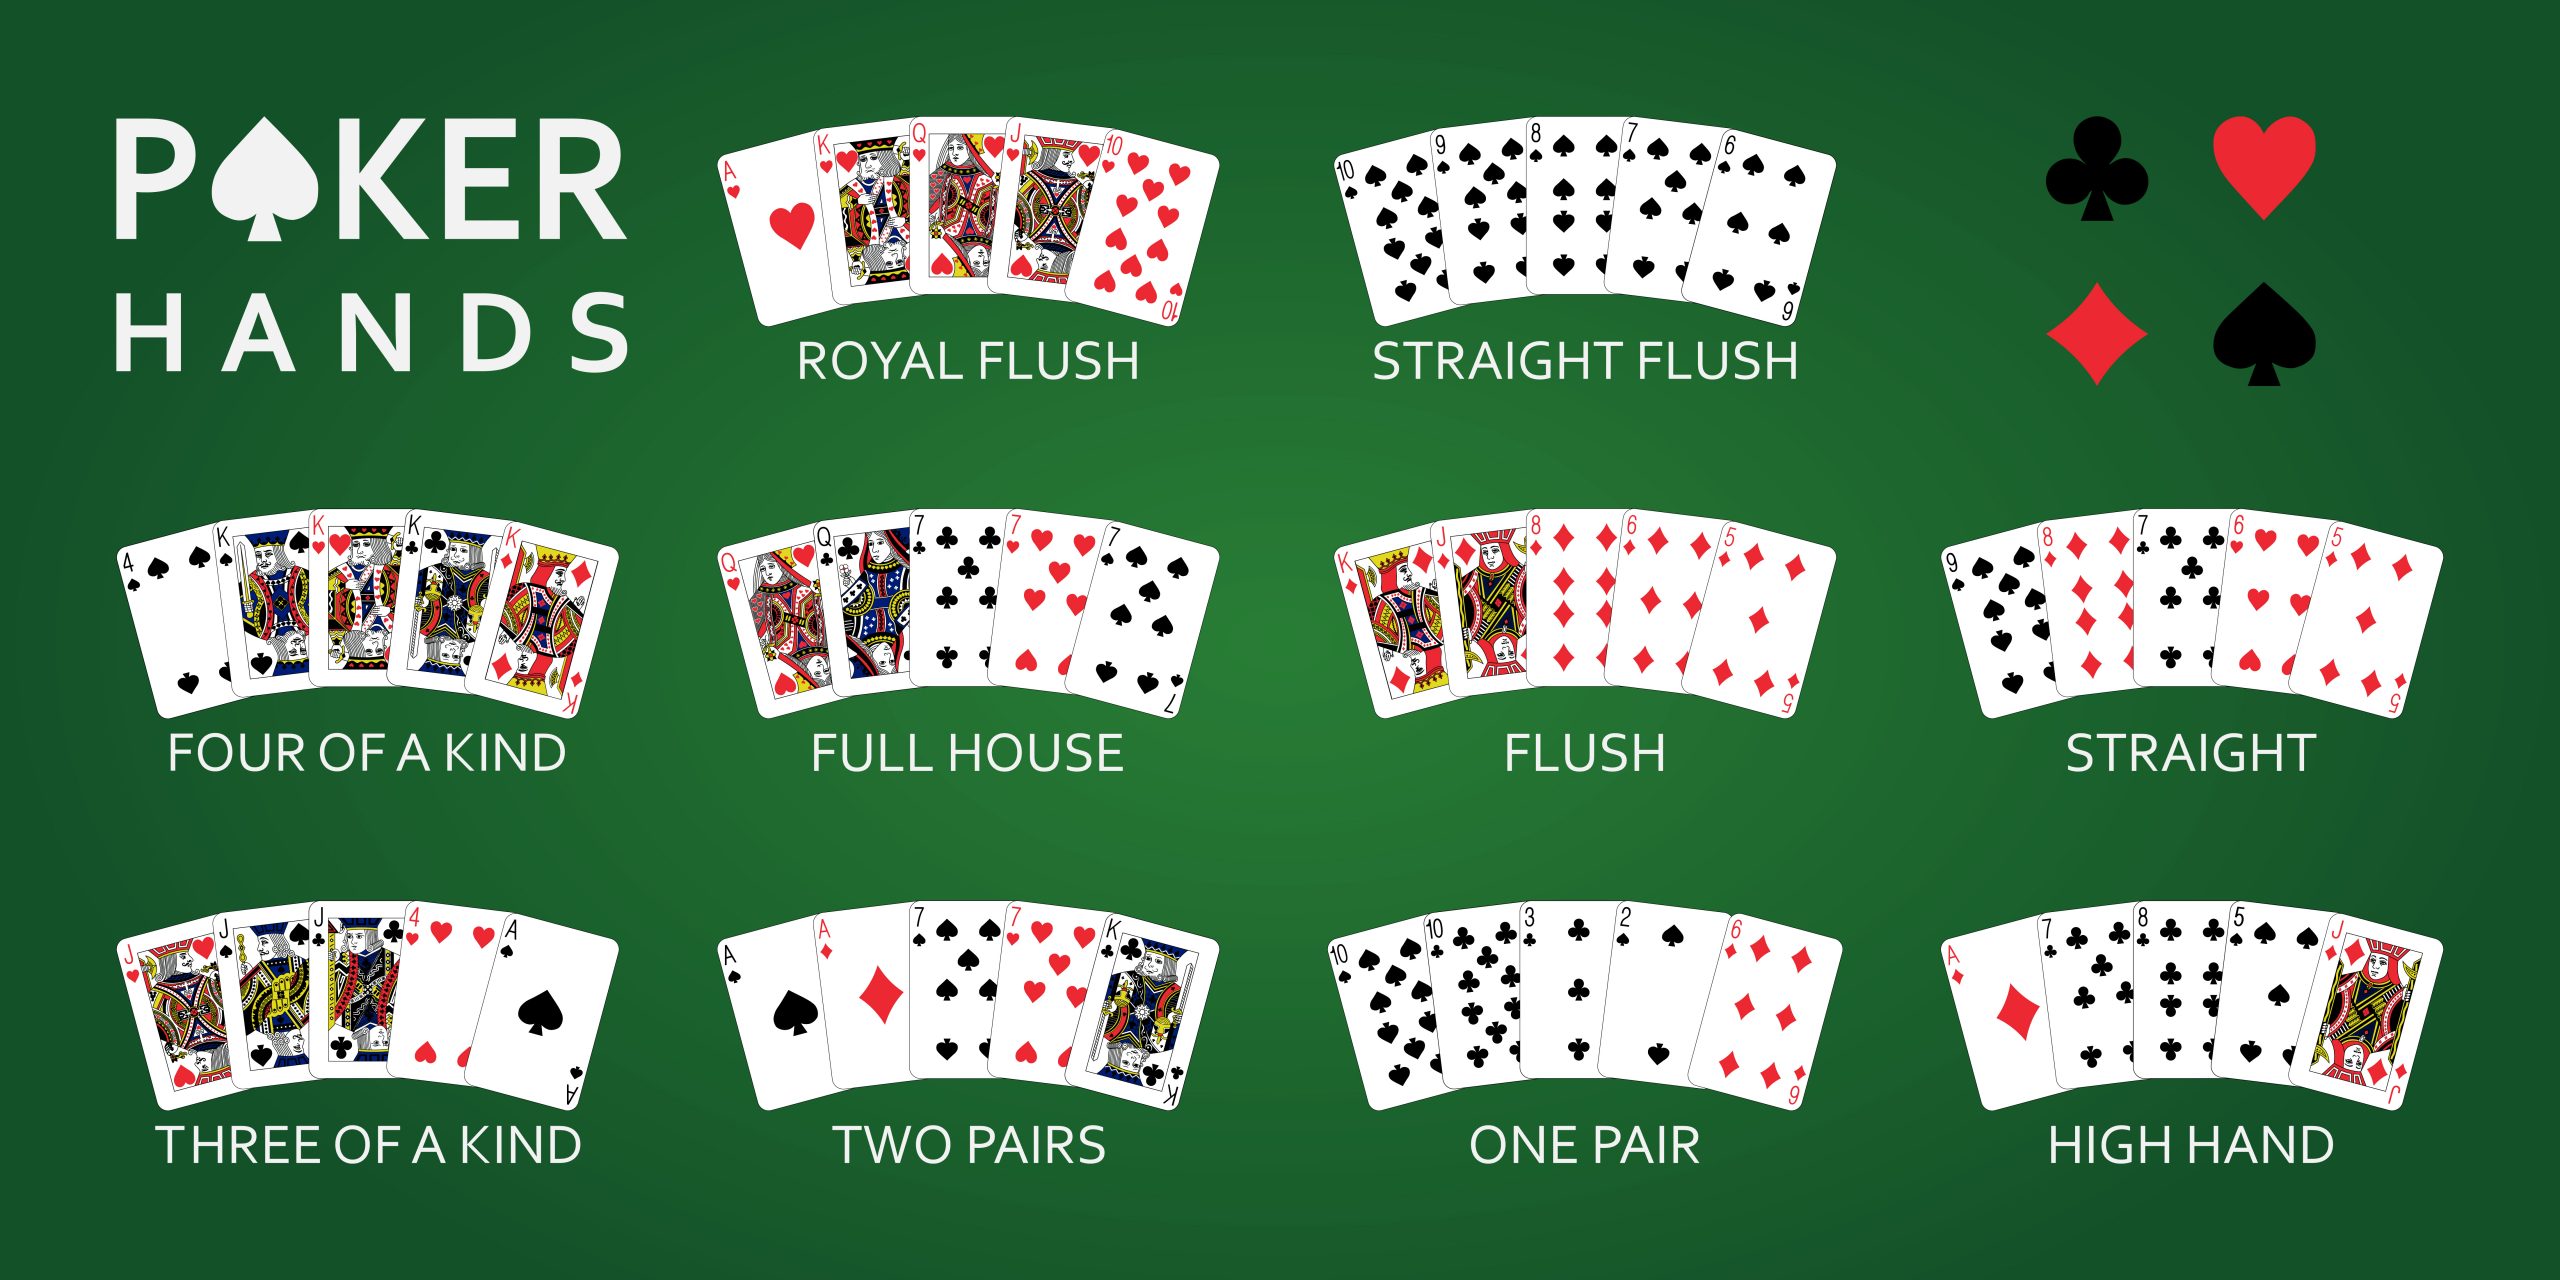 Poker Tips For Beginners: Picking The Right Online Poker Game To Begin